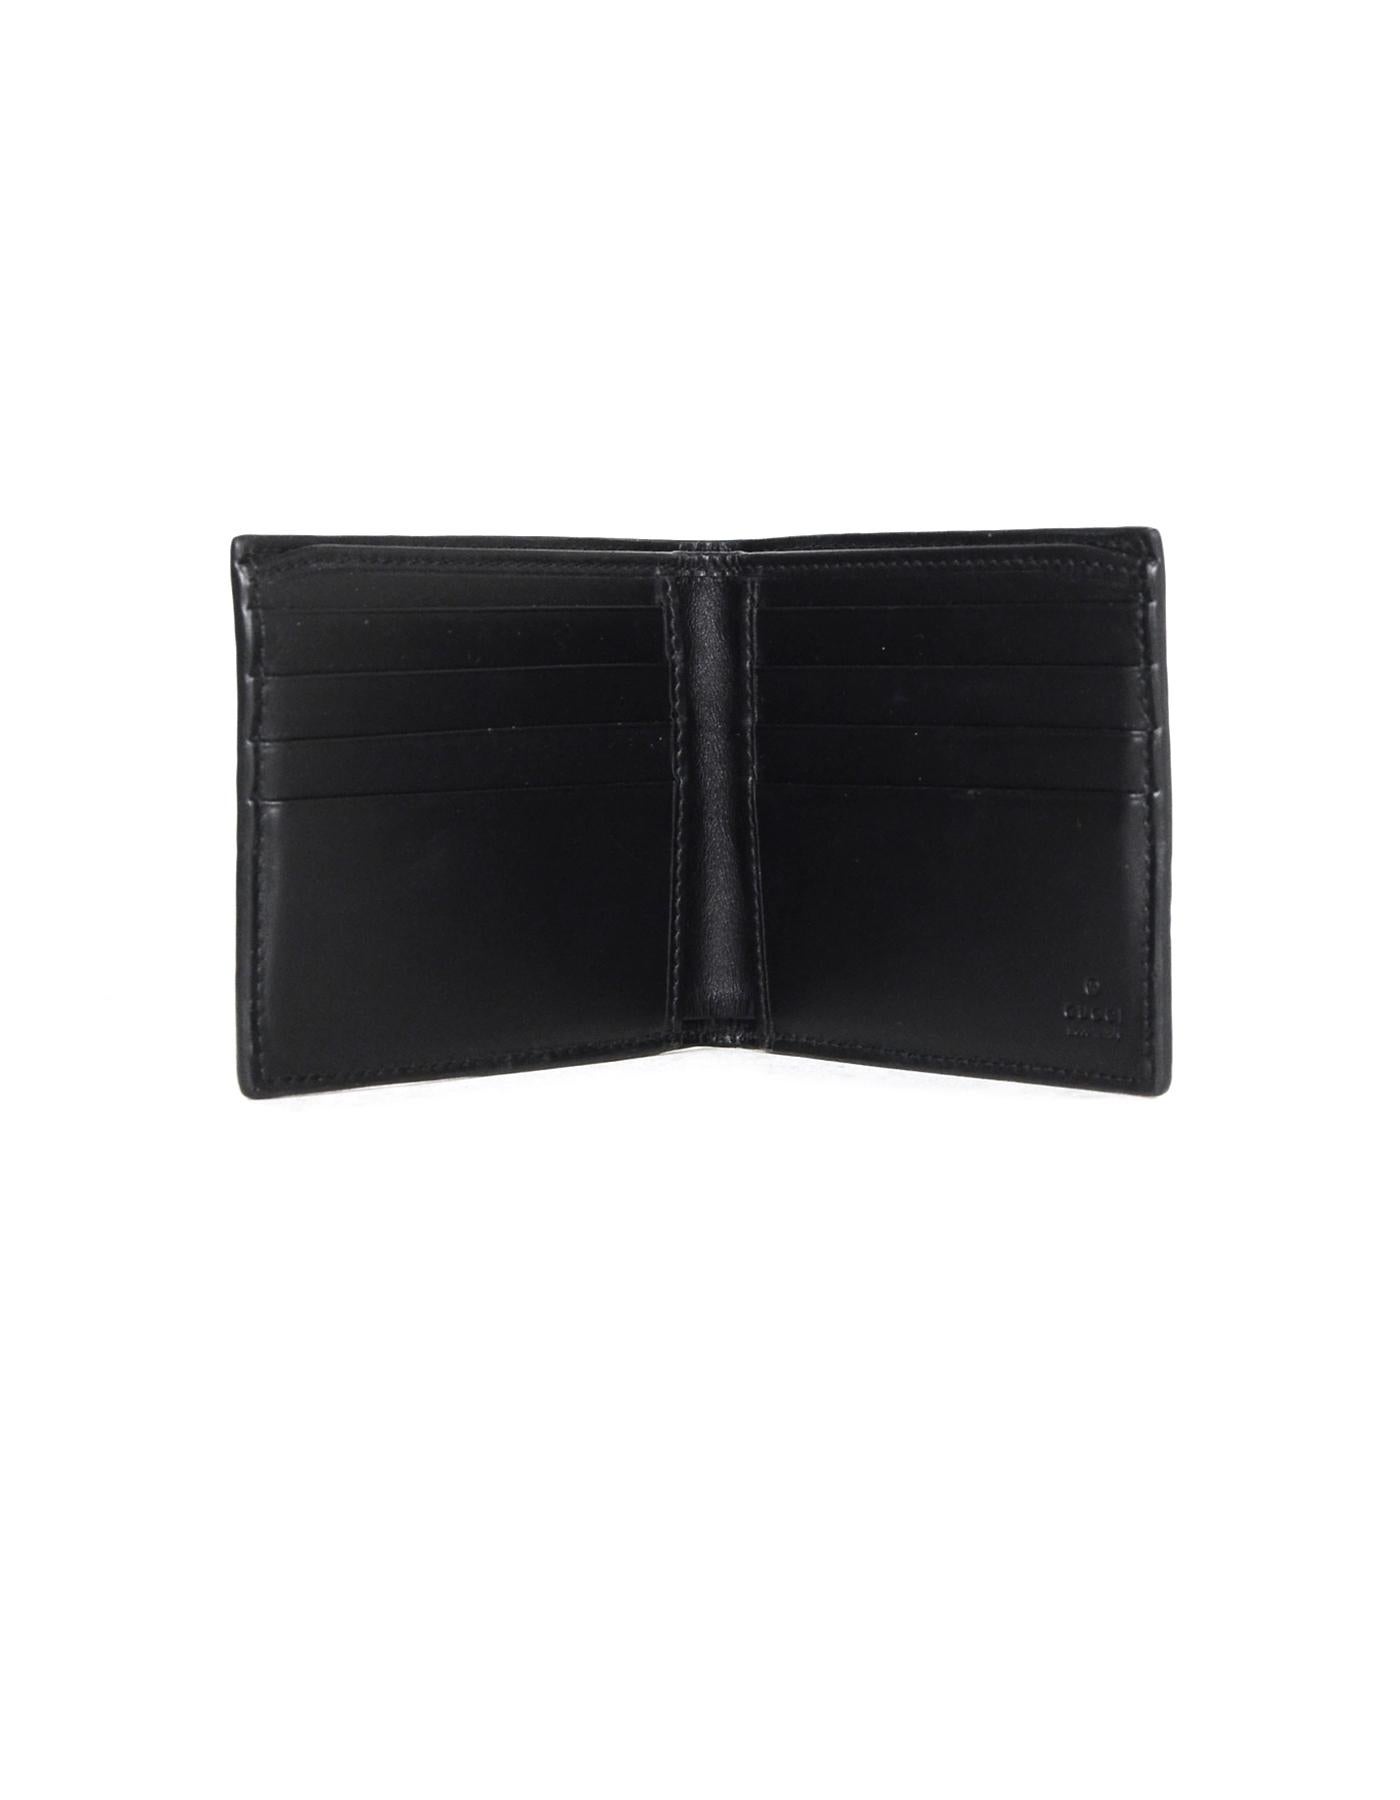 Gucci Black Leather Monogram Signature Web Bi-Fold Wallet 2